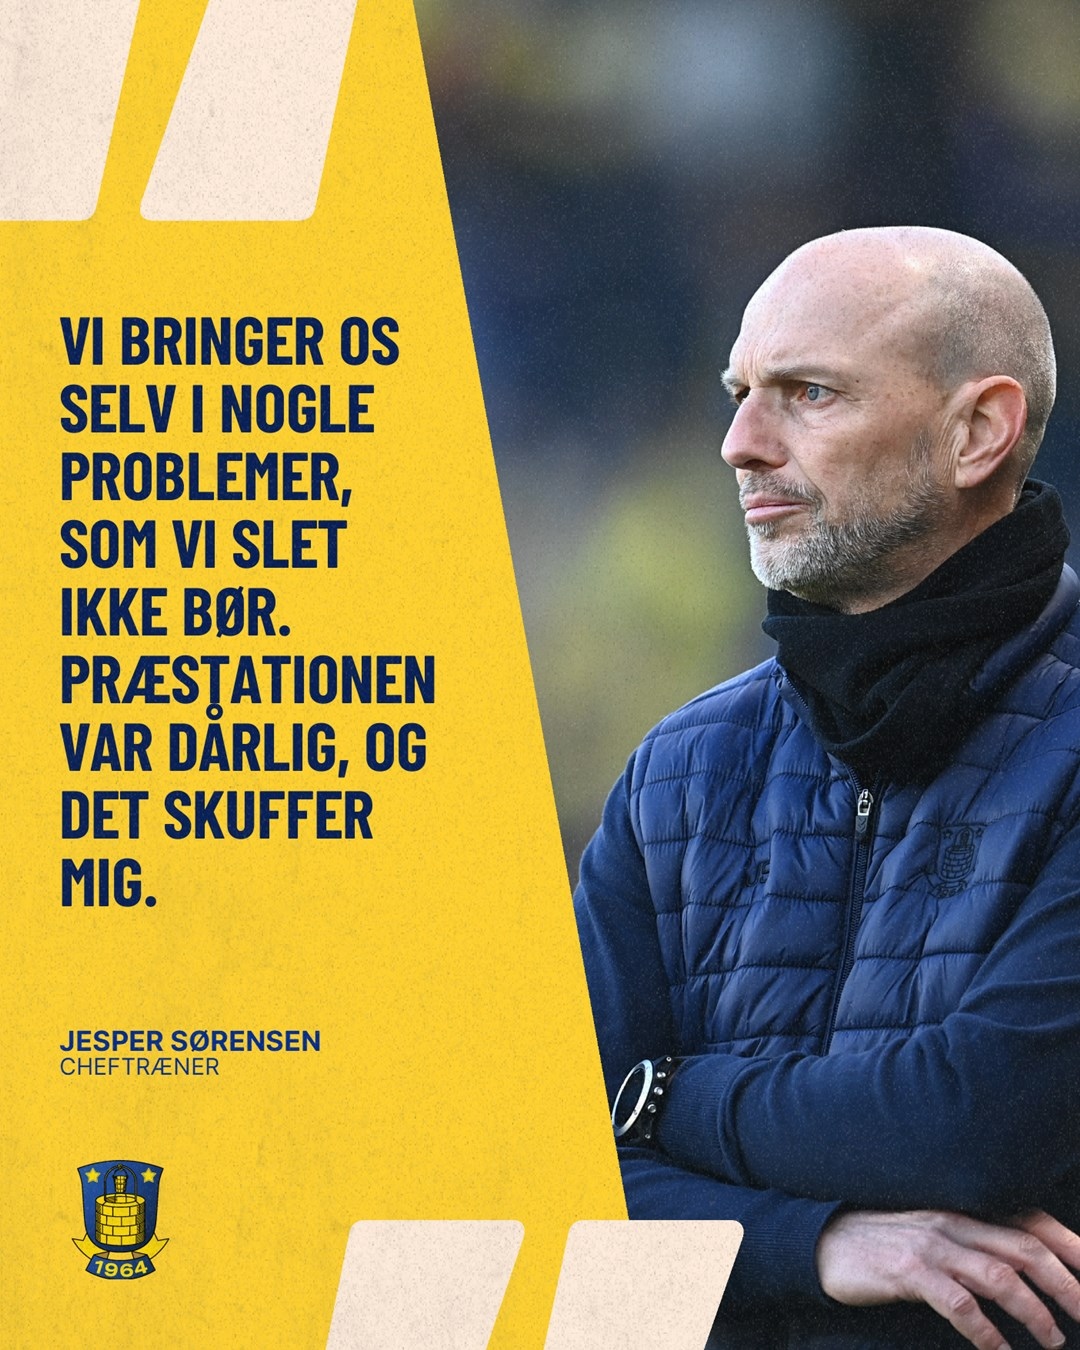 Flipper frisk gyldige Brøndby IF on X: "Jesper Sørensens reaktion på kampen i dag🎙️ Se hele  interviewet på Brøndby TV: https://t.co/VwL0WWlvbO #Brøndby🔵🟡  https://t.co/z8jY3qz5pq" / X